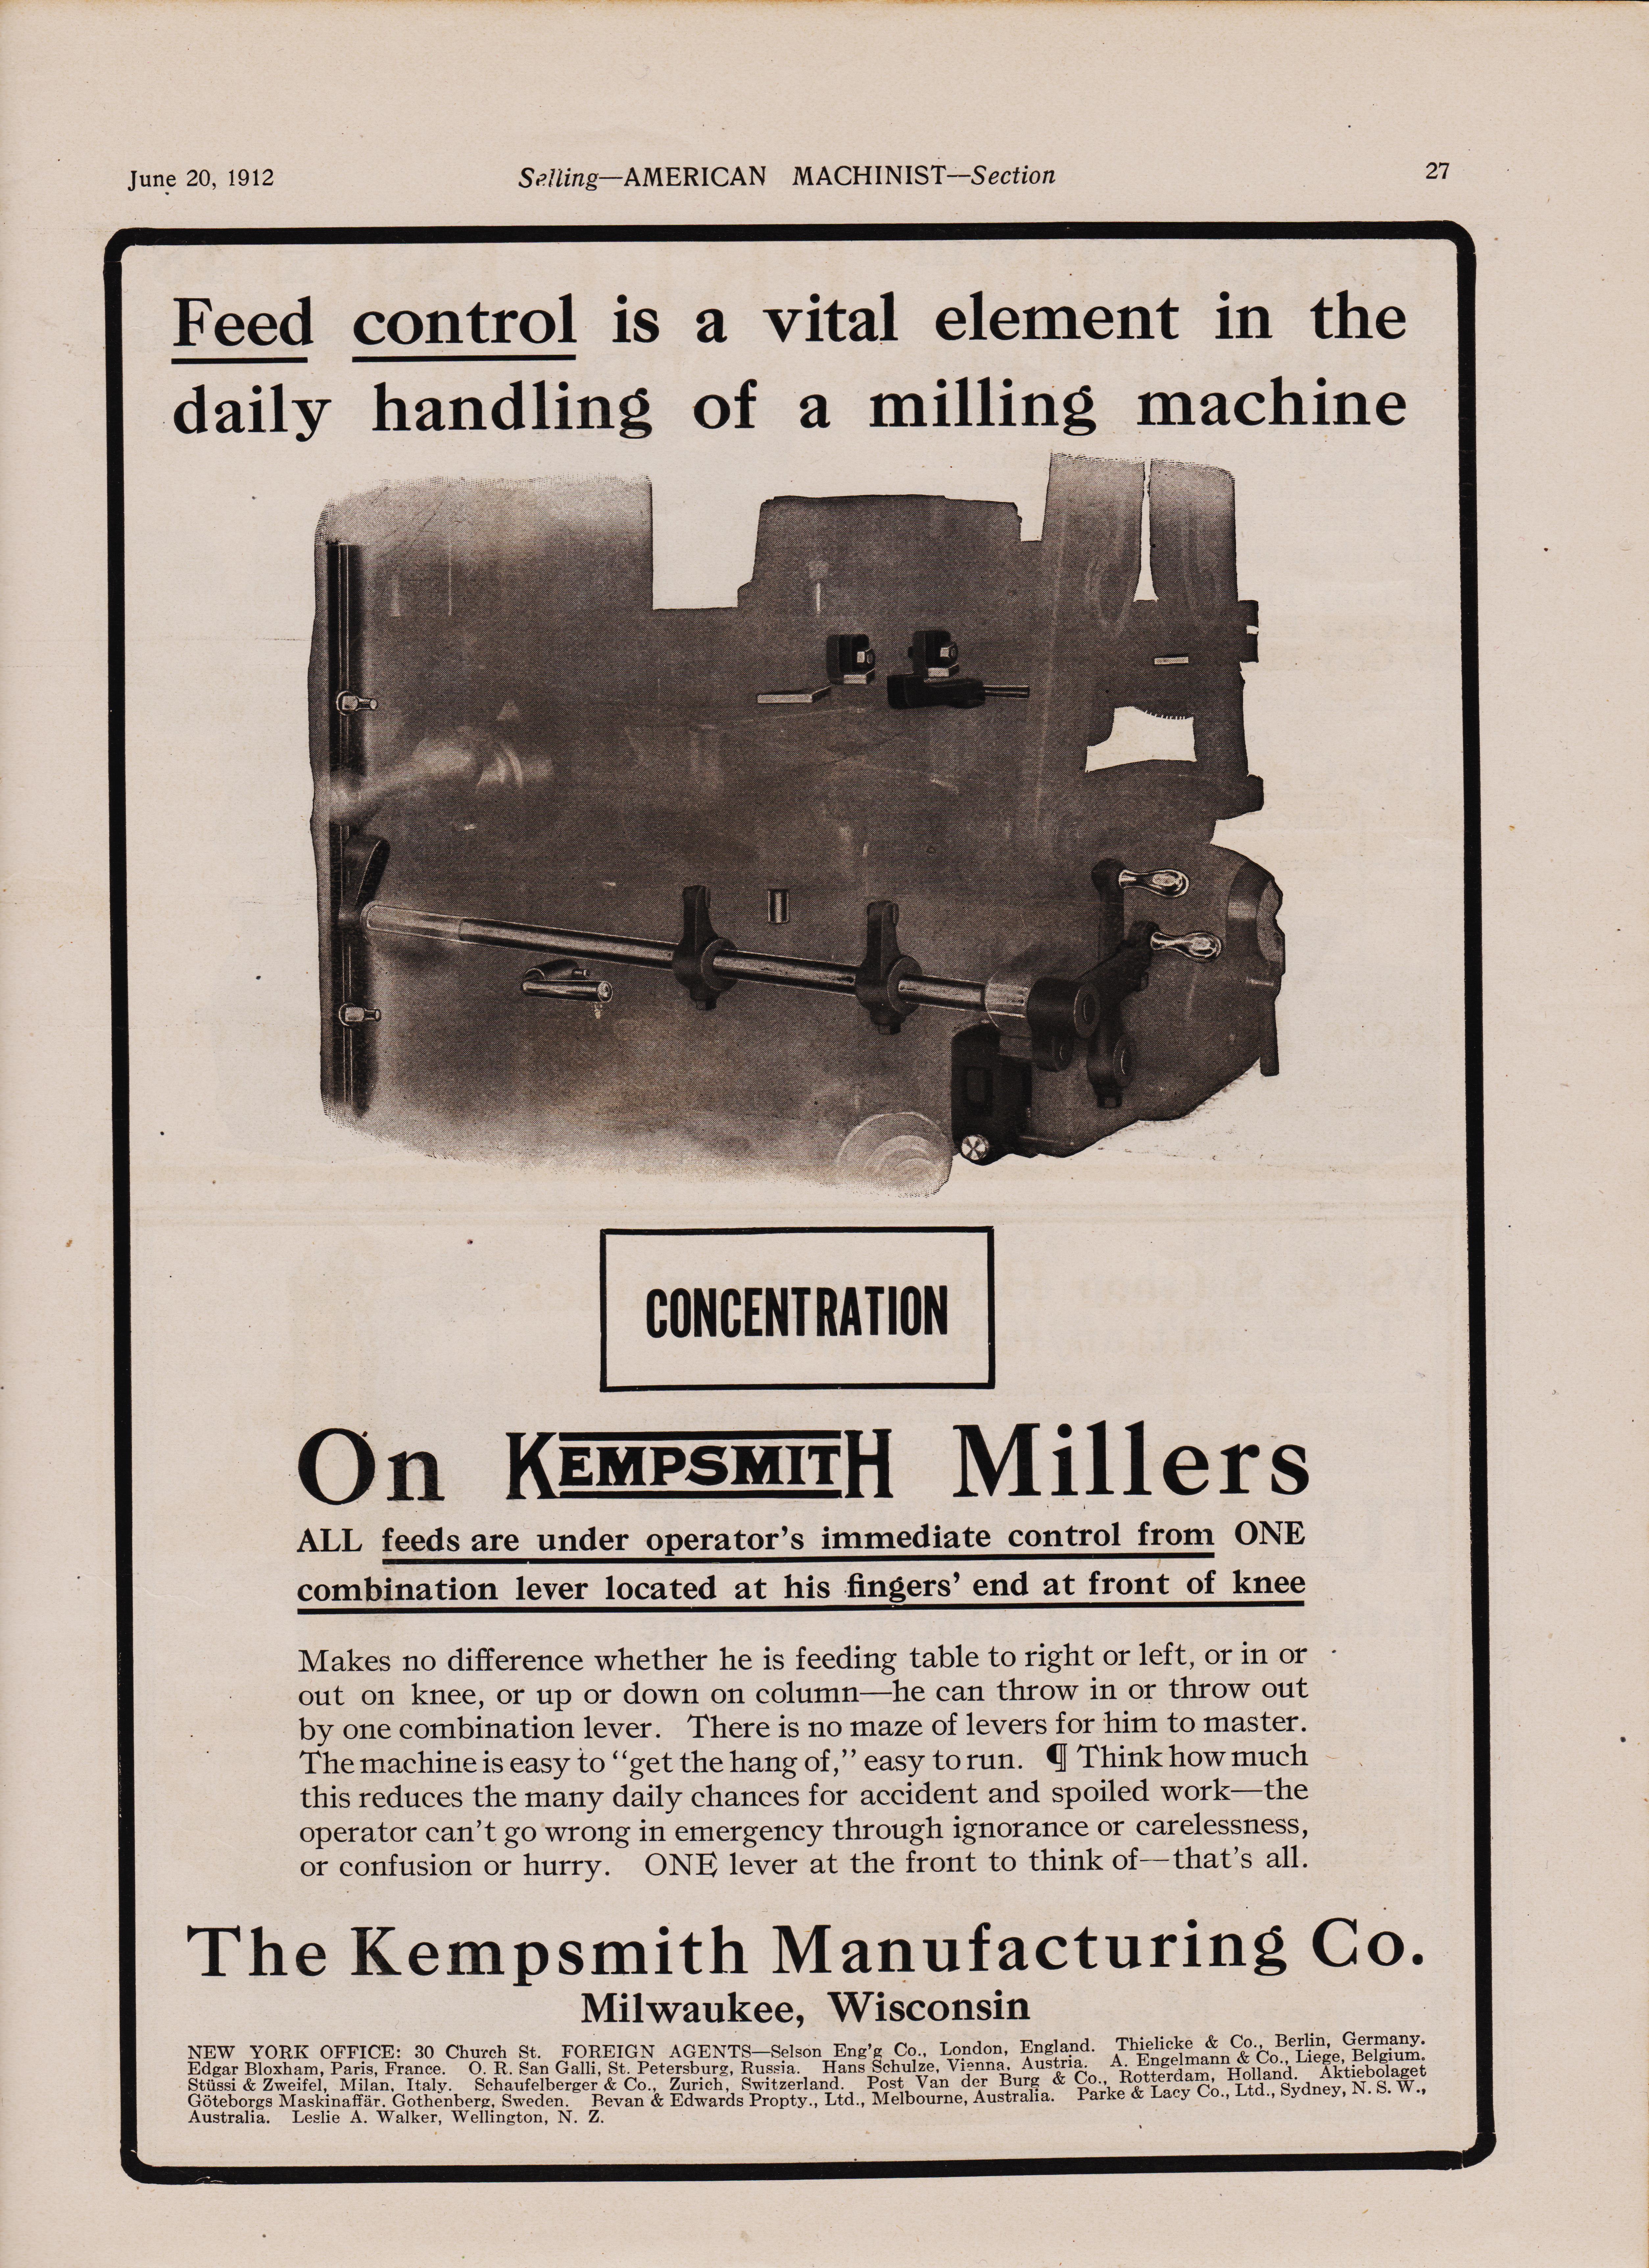 https://antiquemachinery.com/images-2021/American-Machinist-October-1906-pg-89-Landis-Tool-Co-Crank-Crankshift-Grinding-Machine-590dpi.jpeg